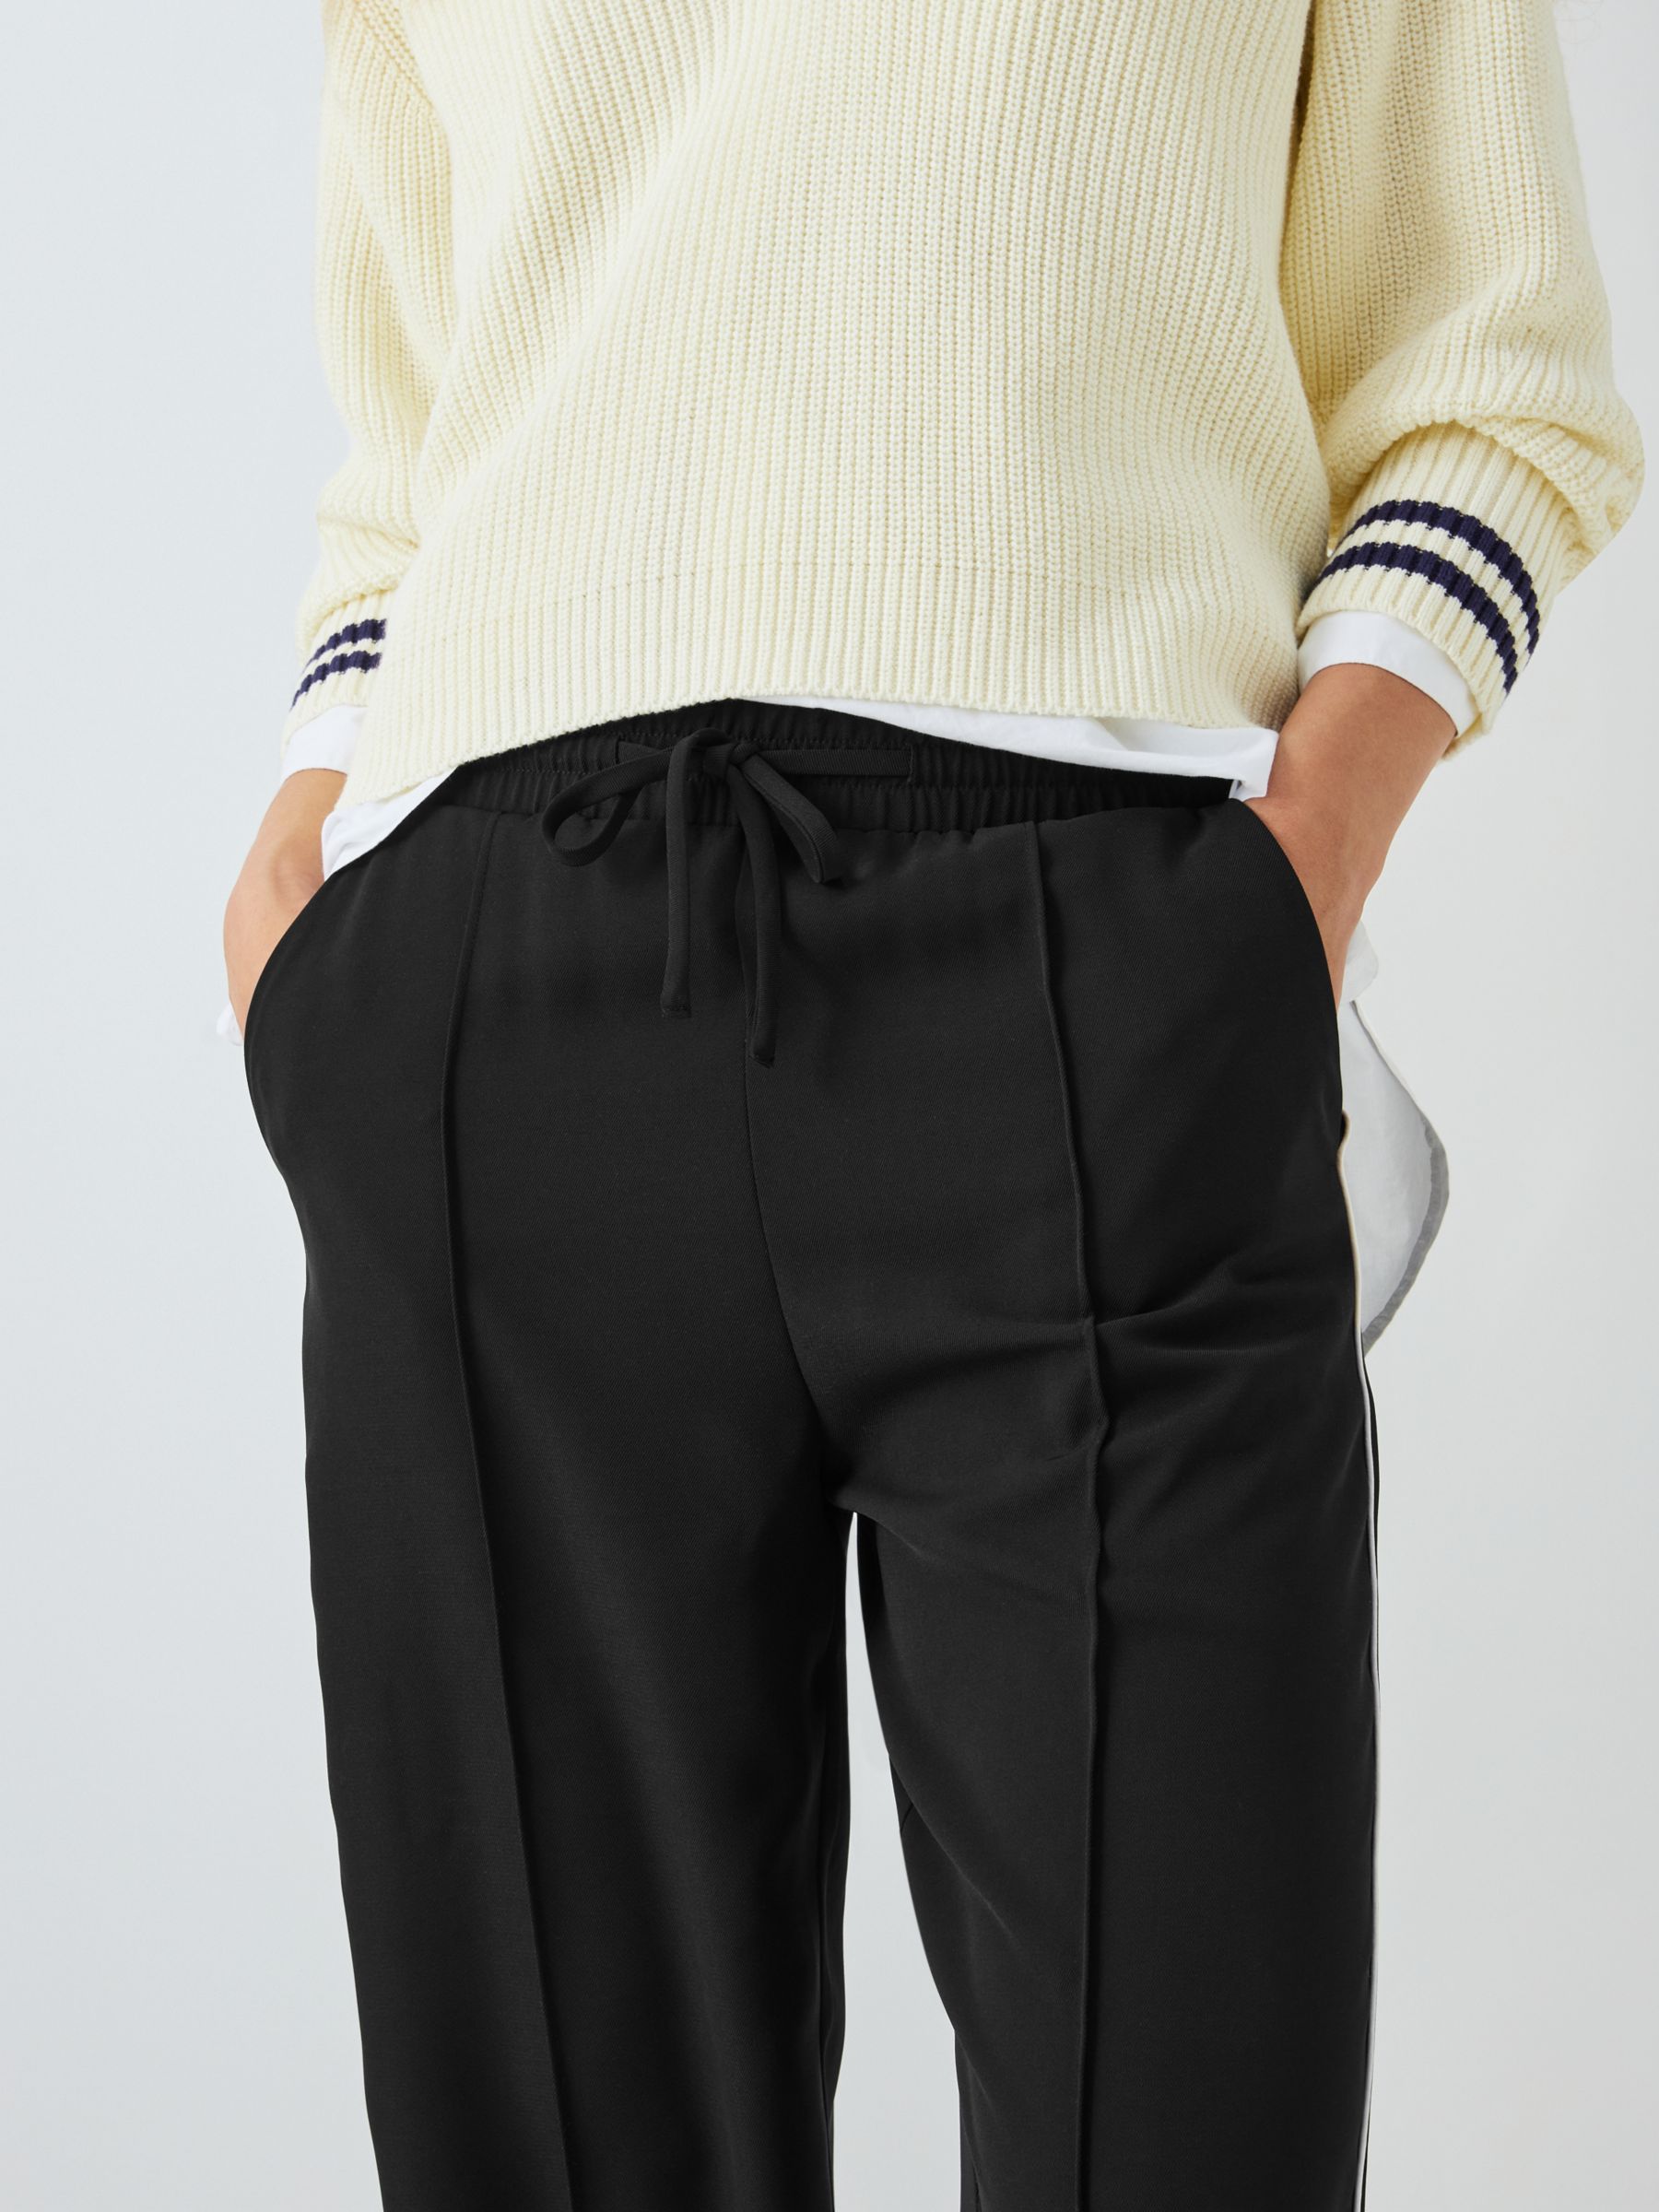 John Lewis ANYDAY Taper Stripe Trousers, Black, 6